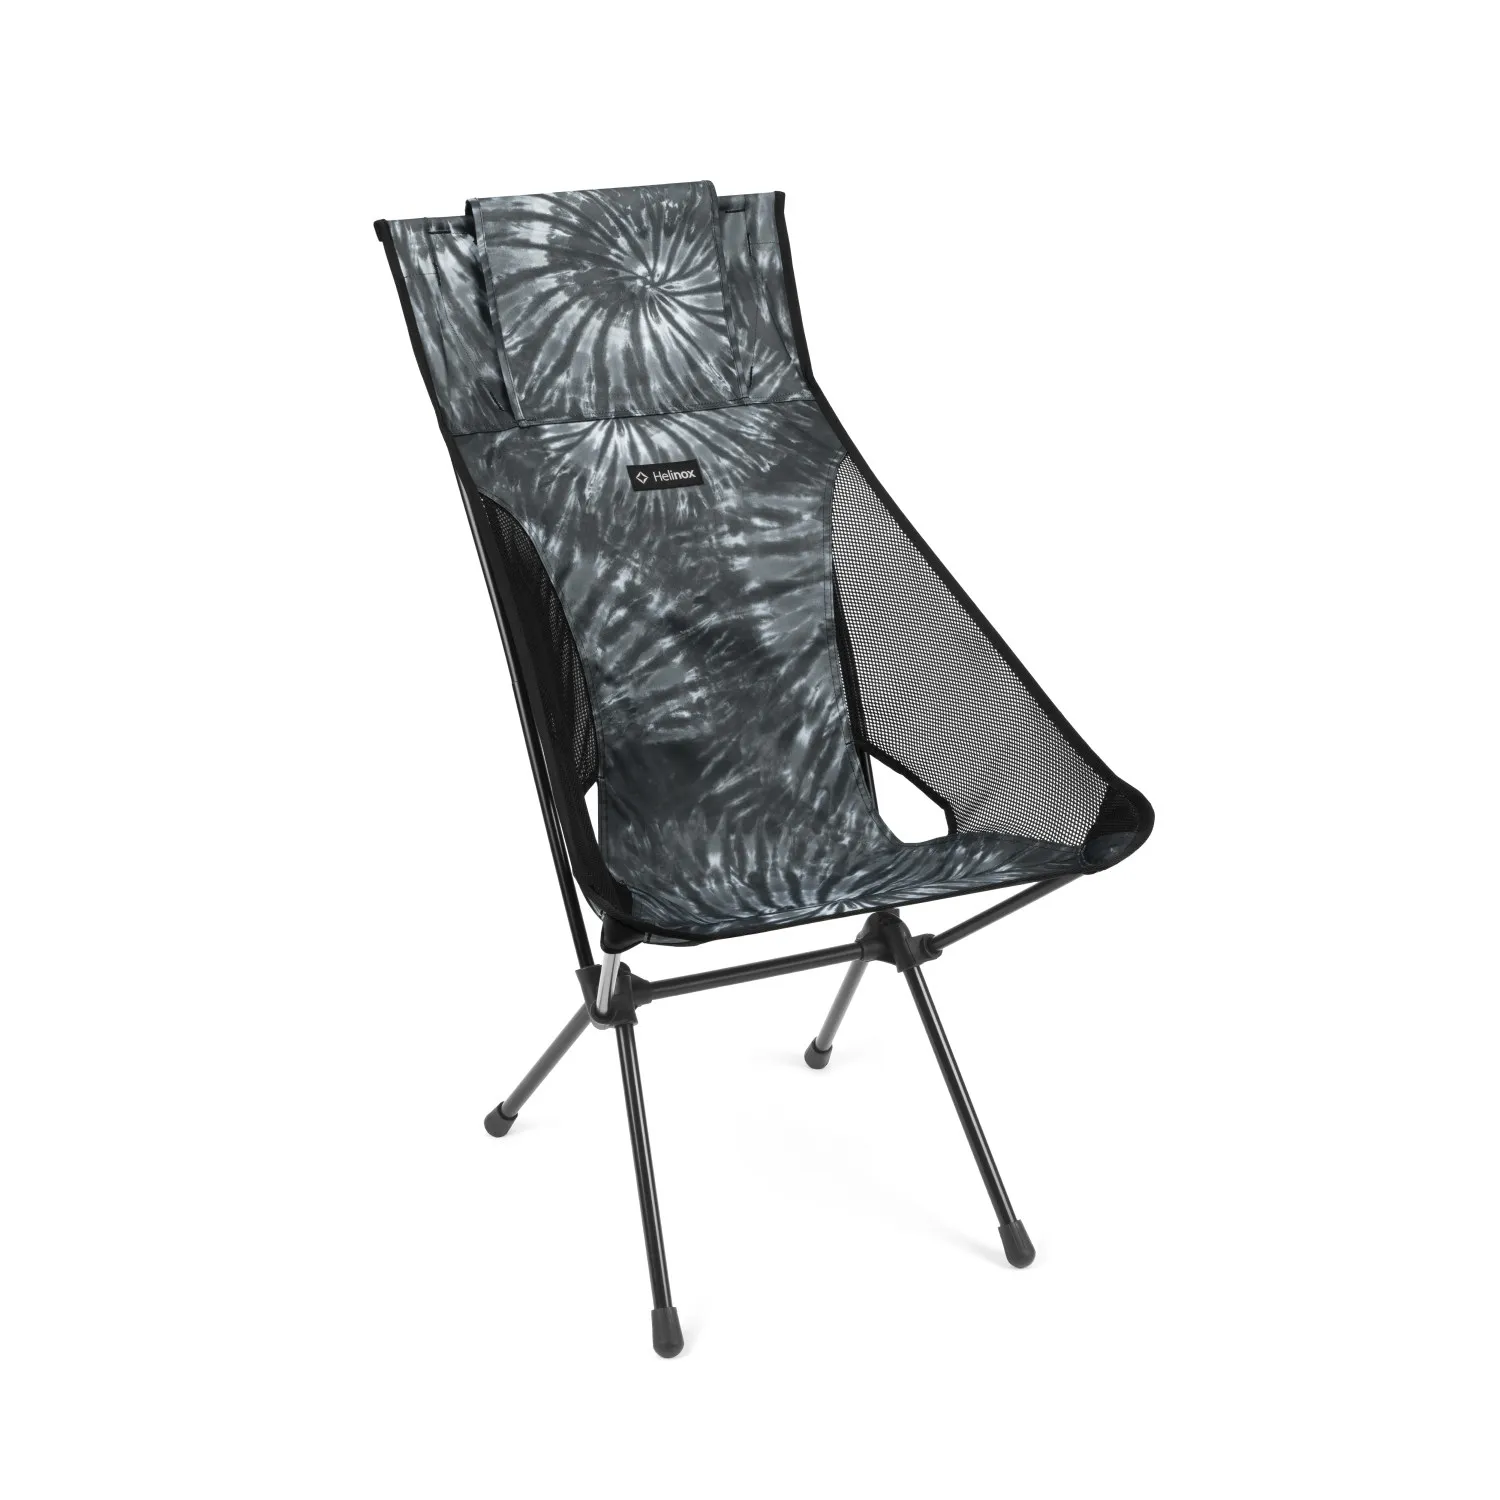 01_Sunset Chair Black Tie Dye 1.jpg